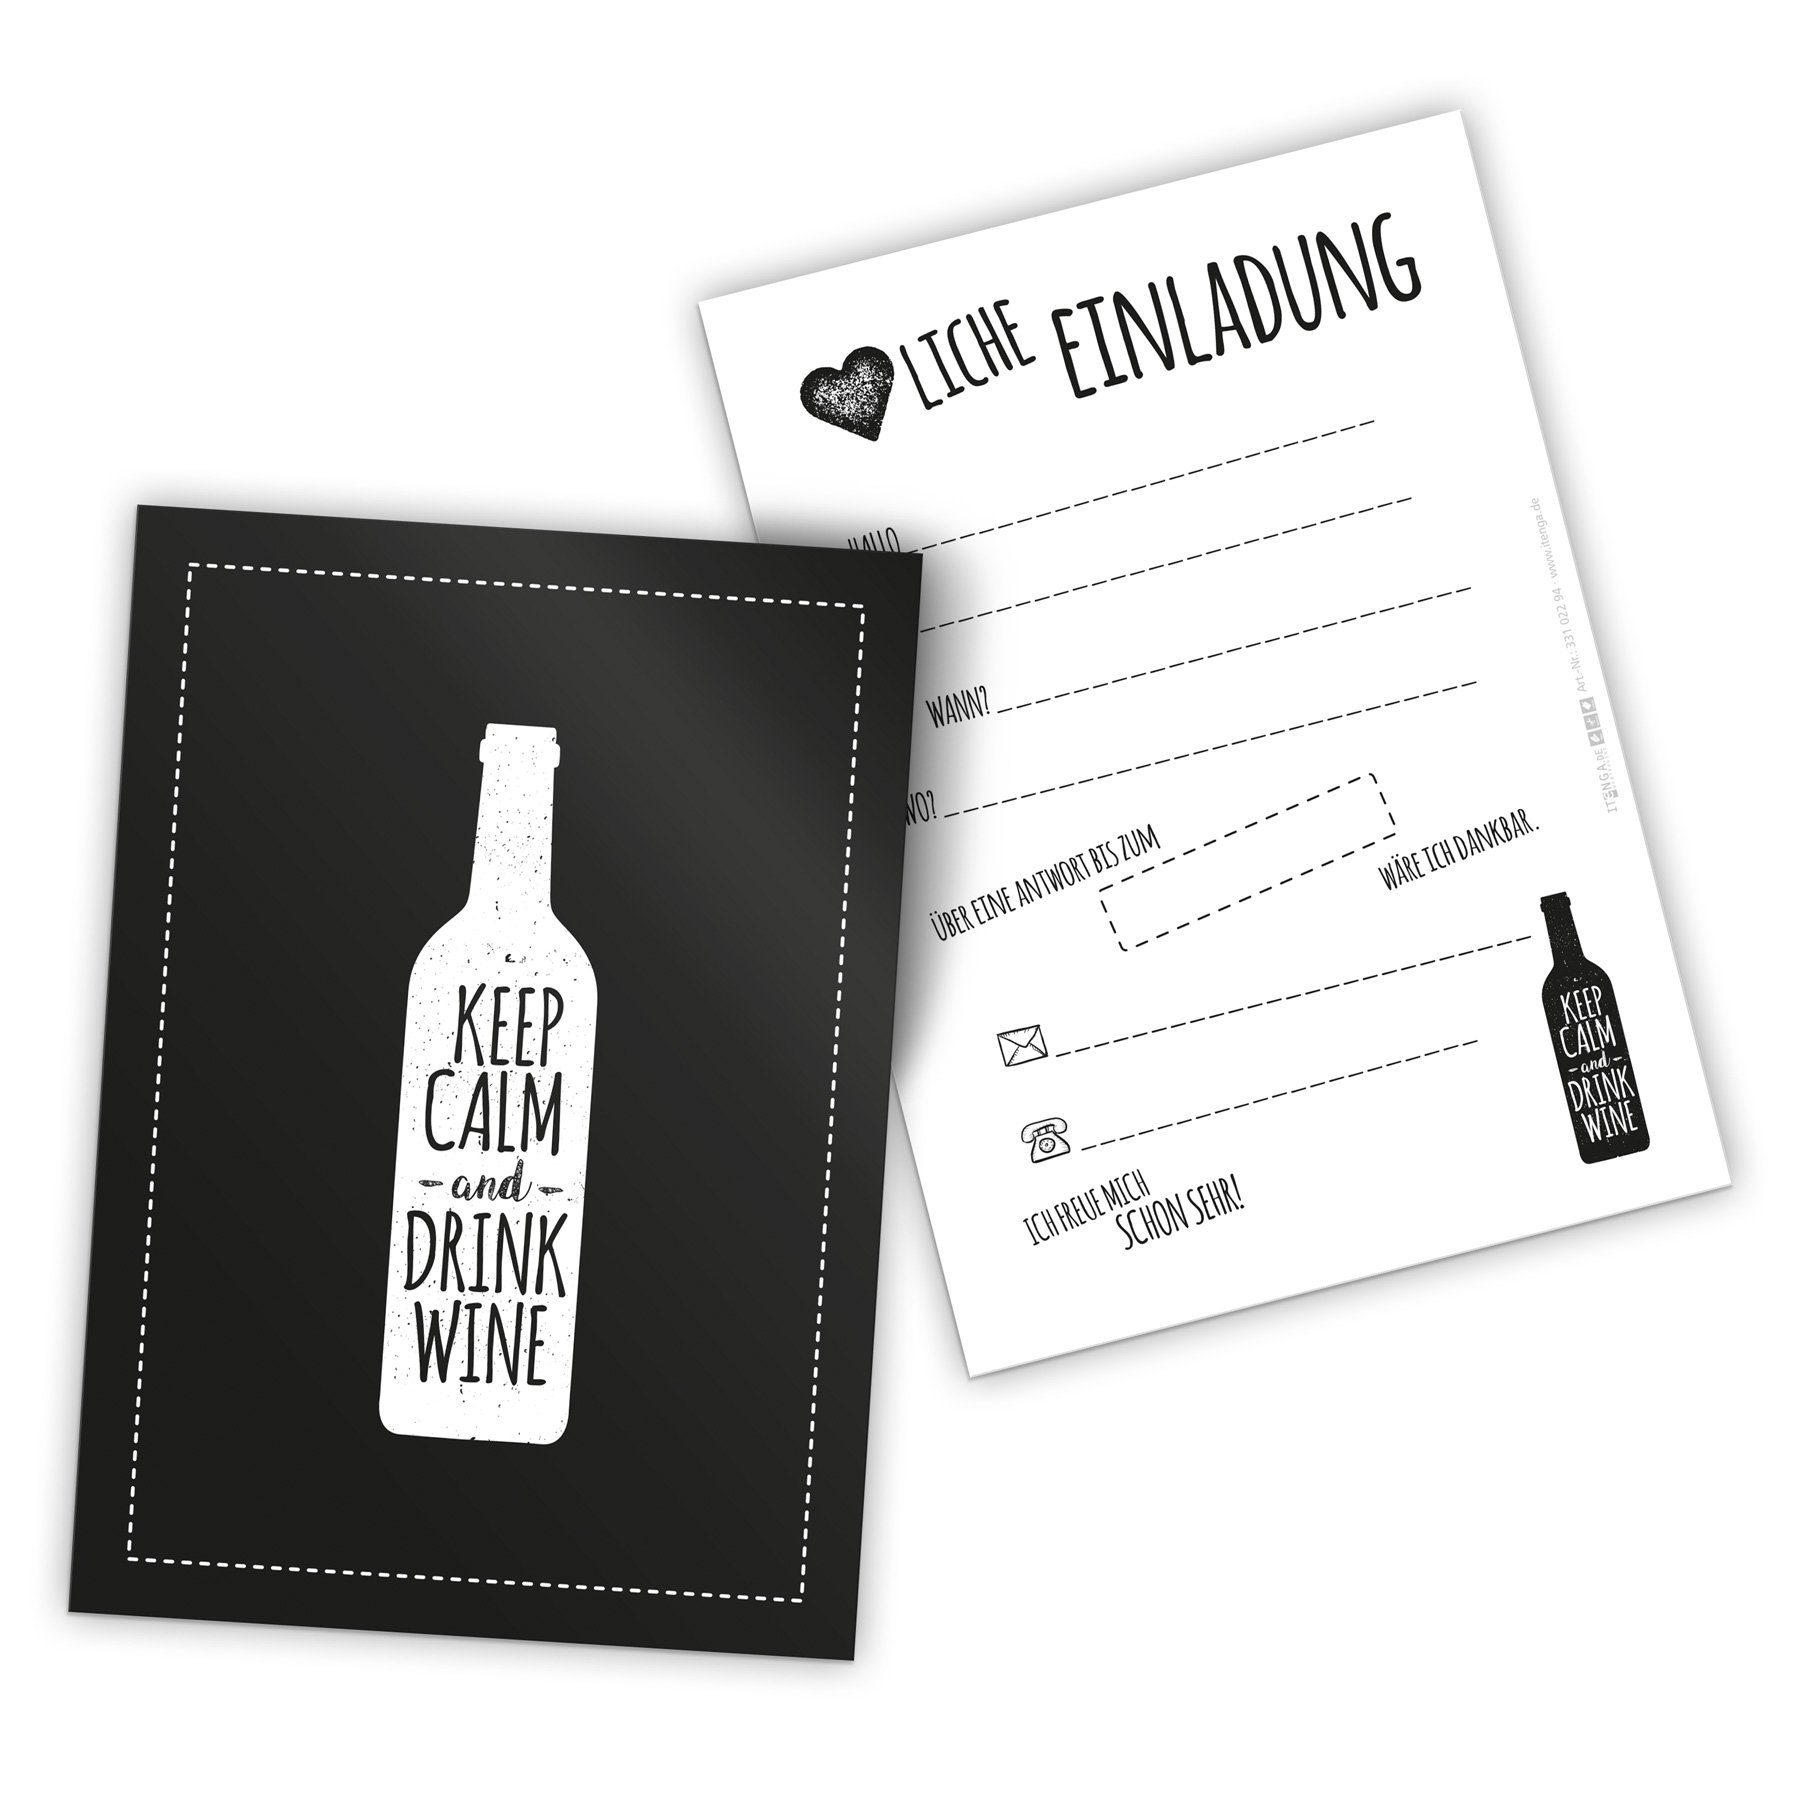 itenga Grußkarten itenga 12 x Postkarte Einladung "Keep calm and drink wine" Grillparty